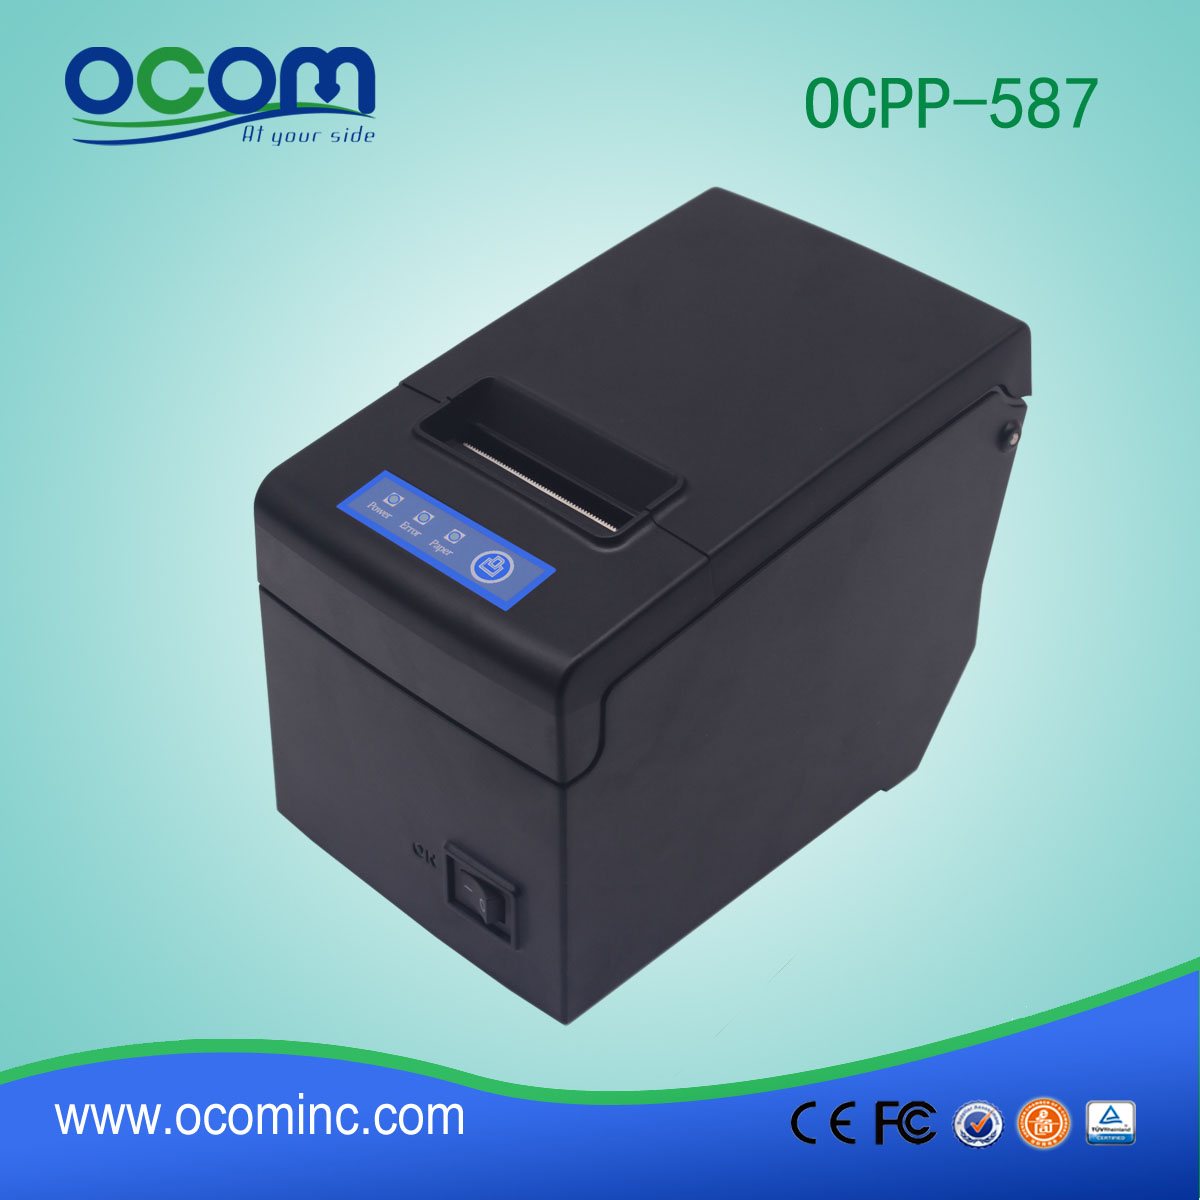 58mm barato POS térmica impresora de recibos factura con soporte de papel grande (OCPP-587)